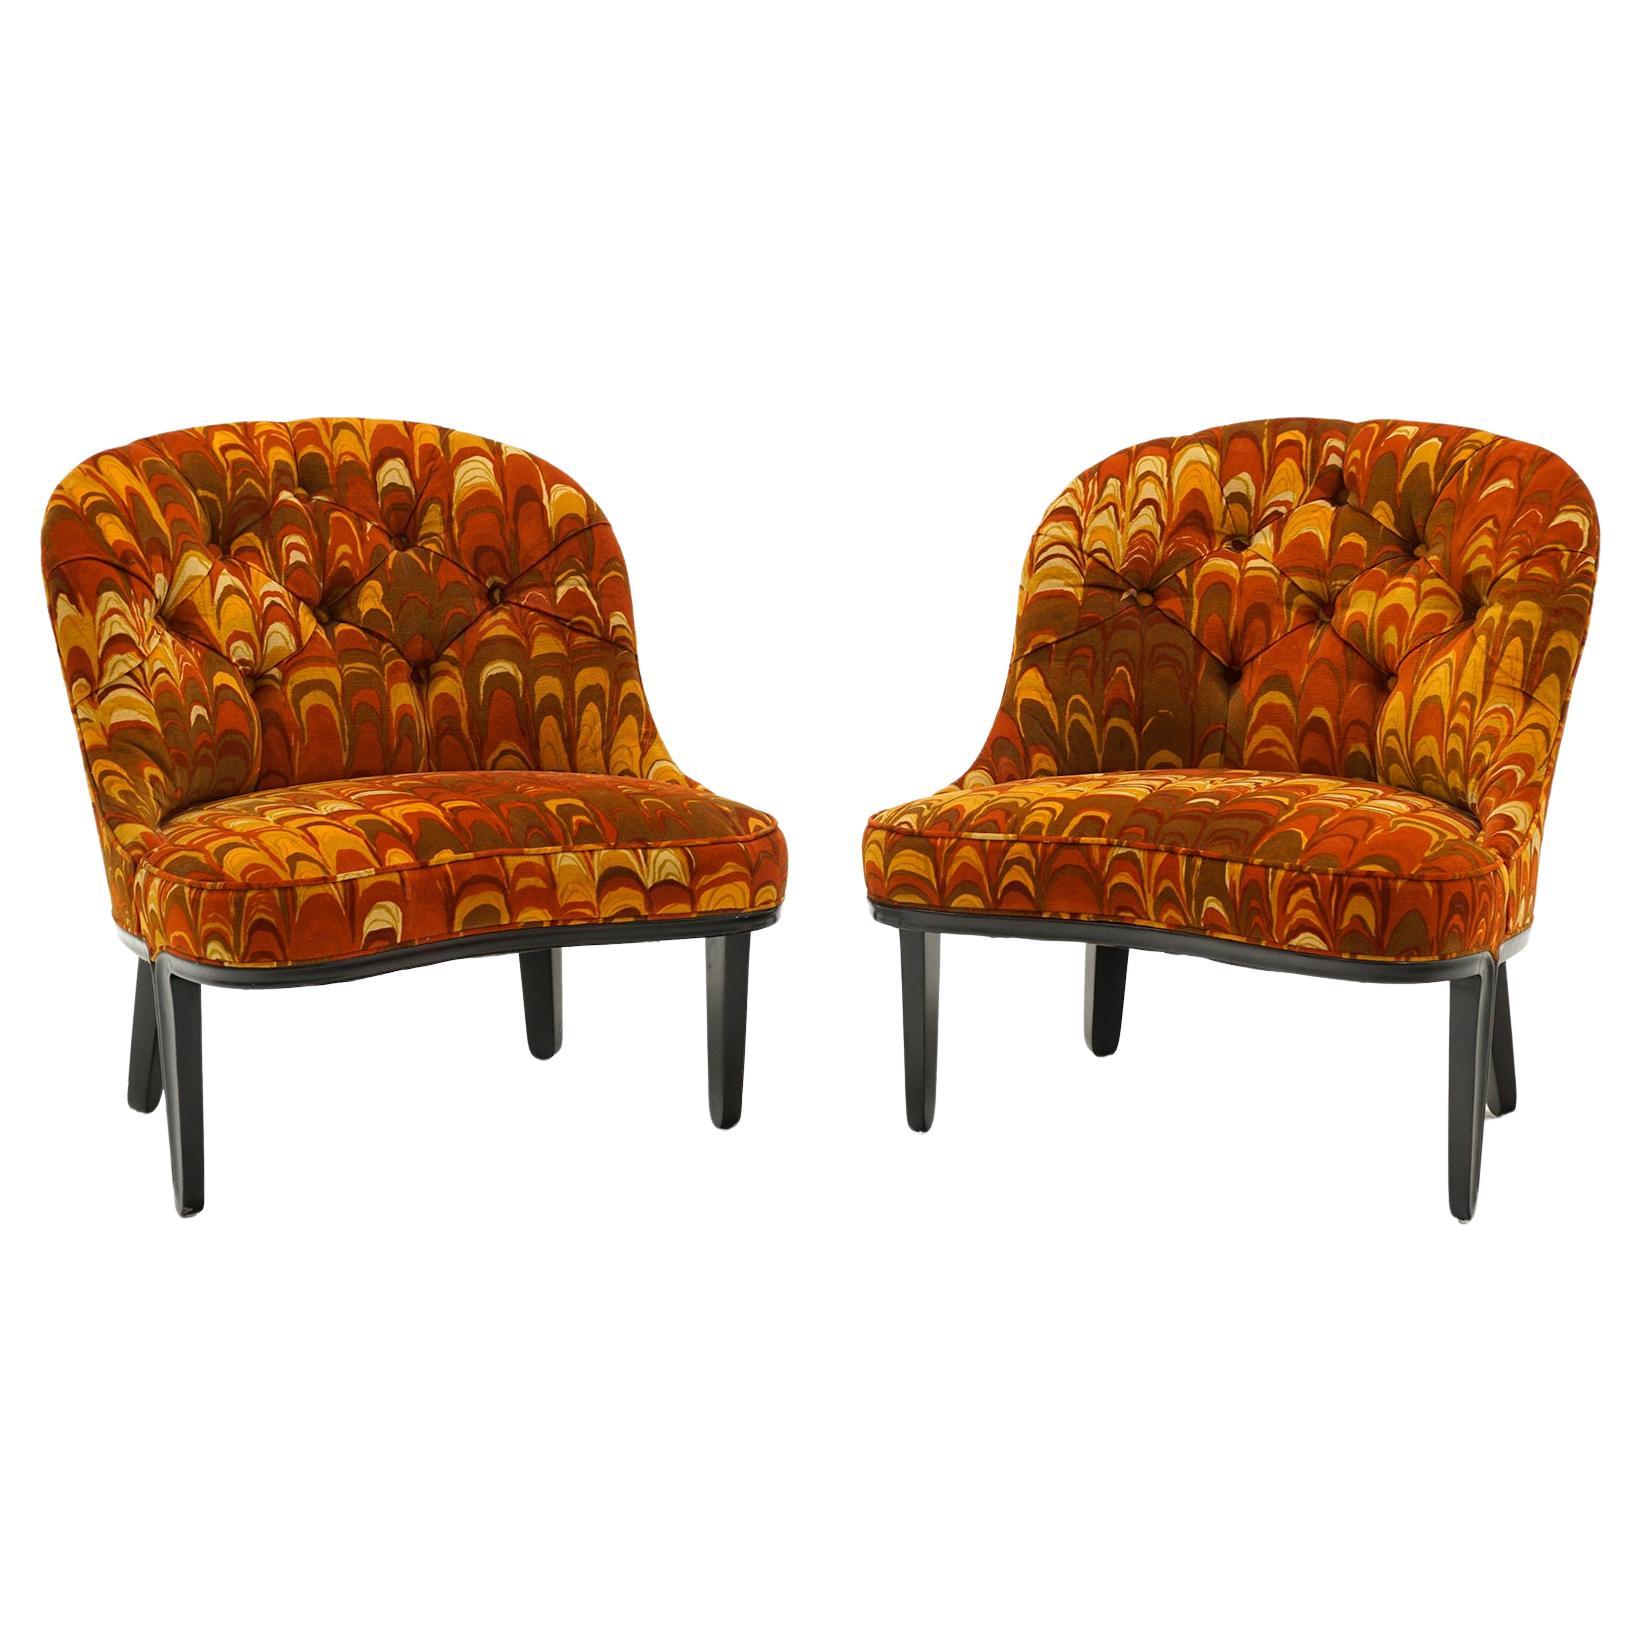 Pair Armless Janus Chairs by Edward Wormley. Rare orangeJack Lenor Larsen Fabric